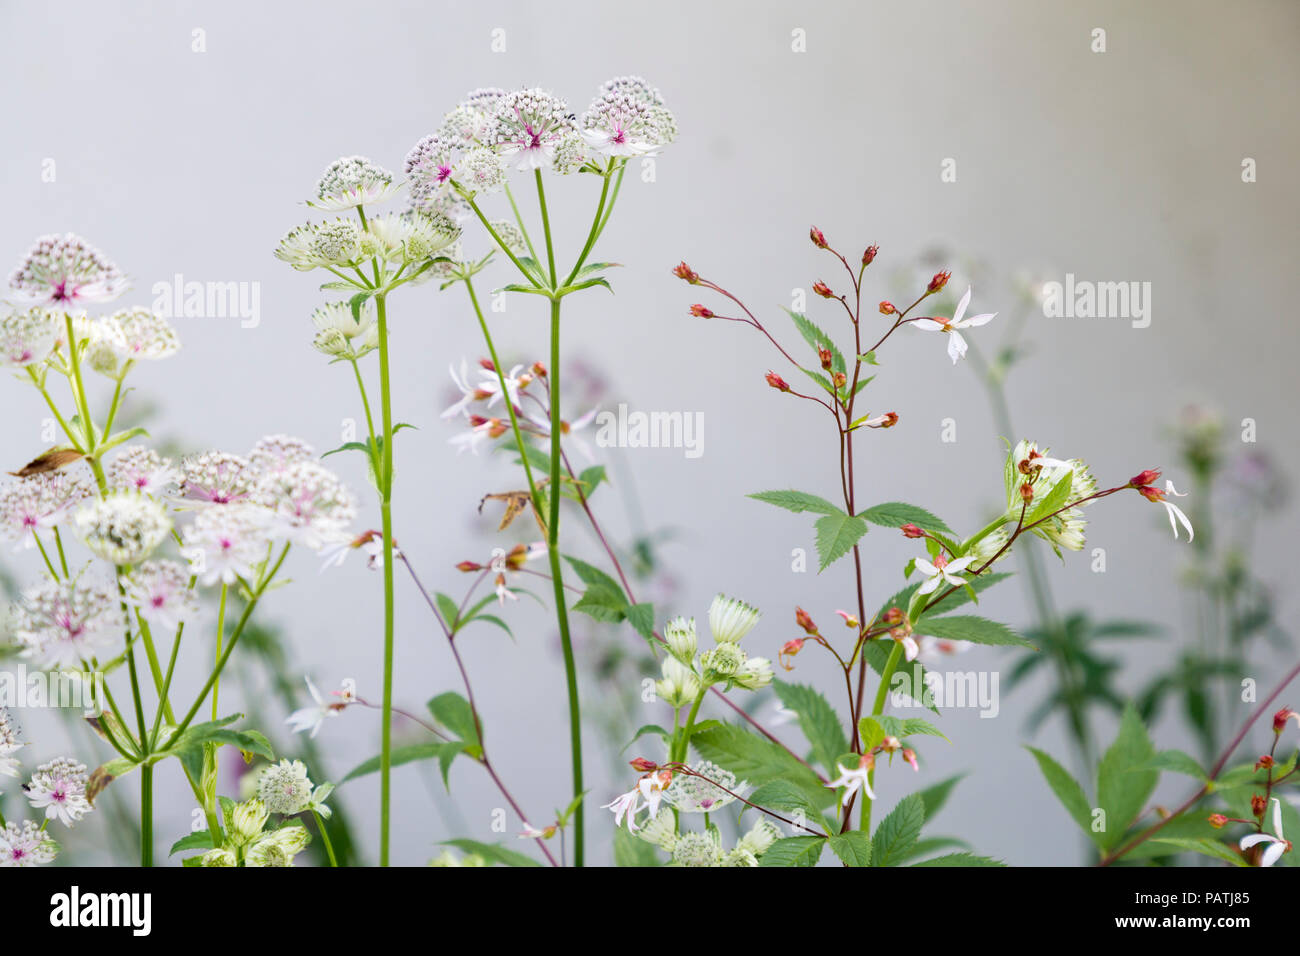 Planting combination of Astrantia major and Gillenia trifoliata Stock Photo